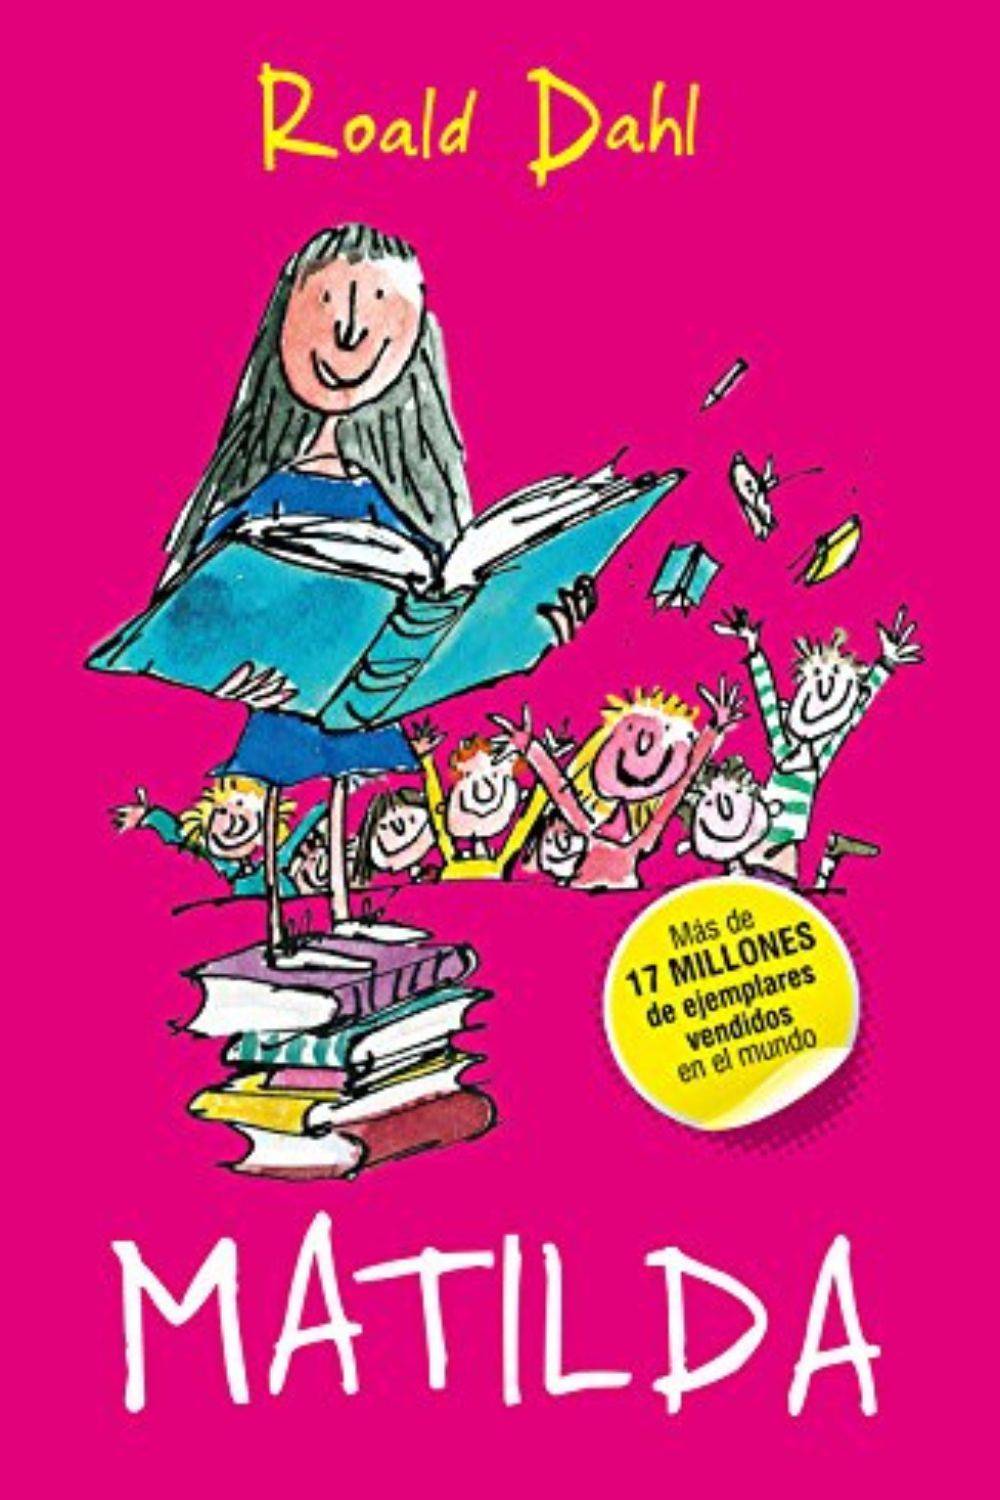 Libros infantiles: ‘Matilda’ de Roald Dahl